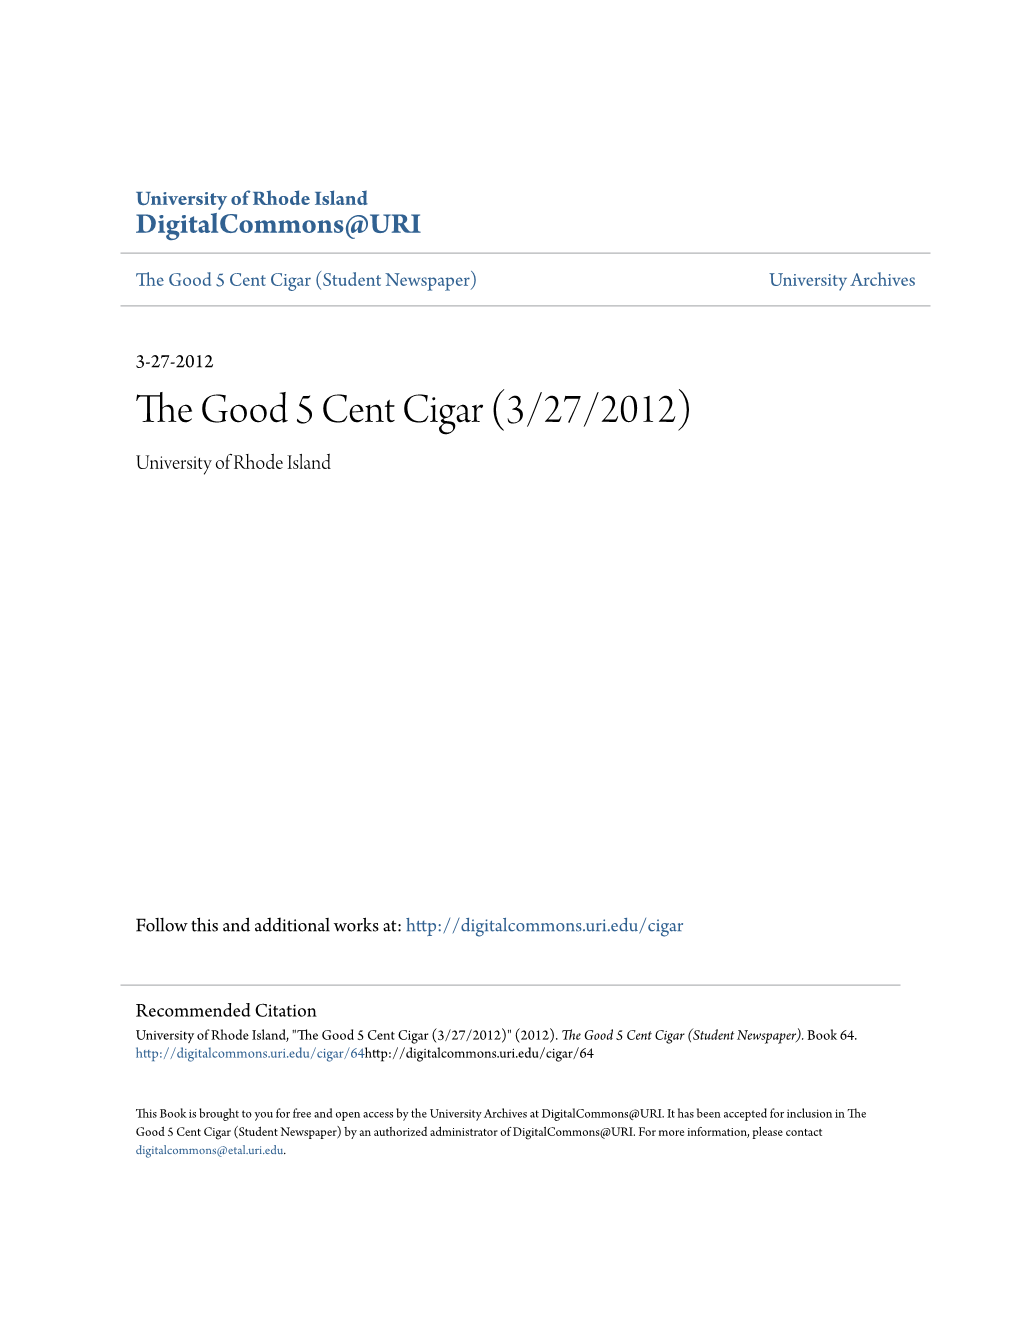 The Good 5 Cent Cigar (3/27/2012) University of Rhode Island